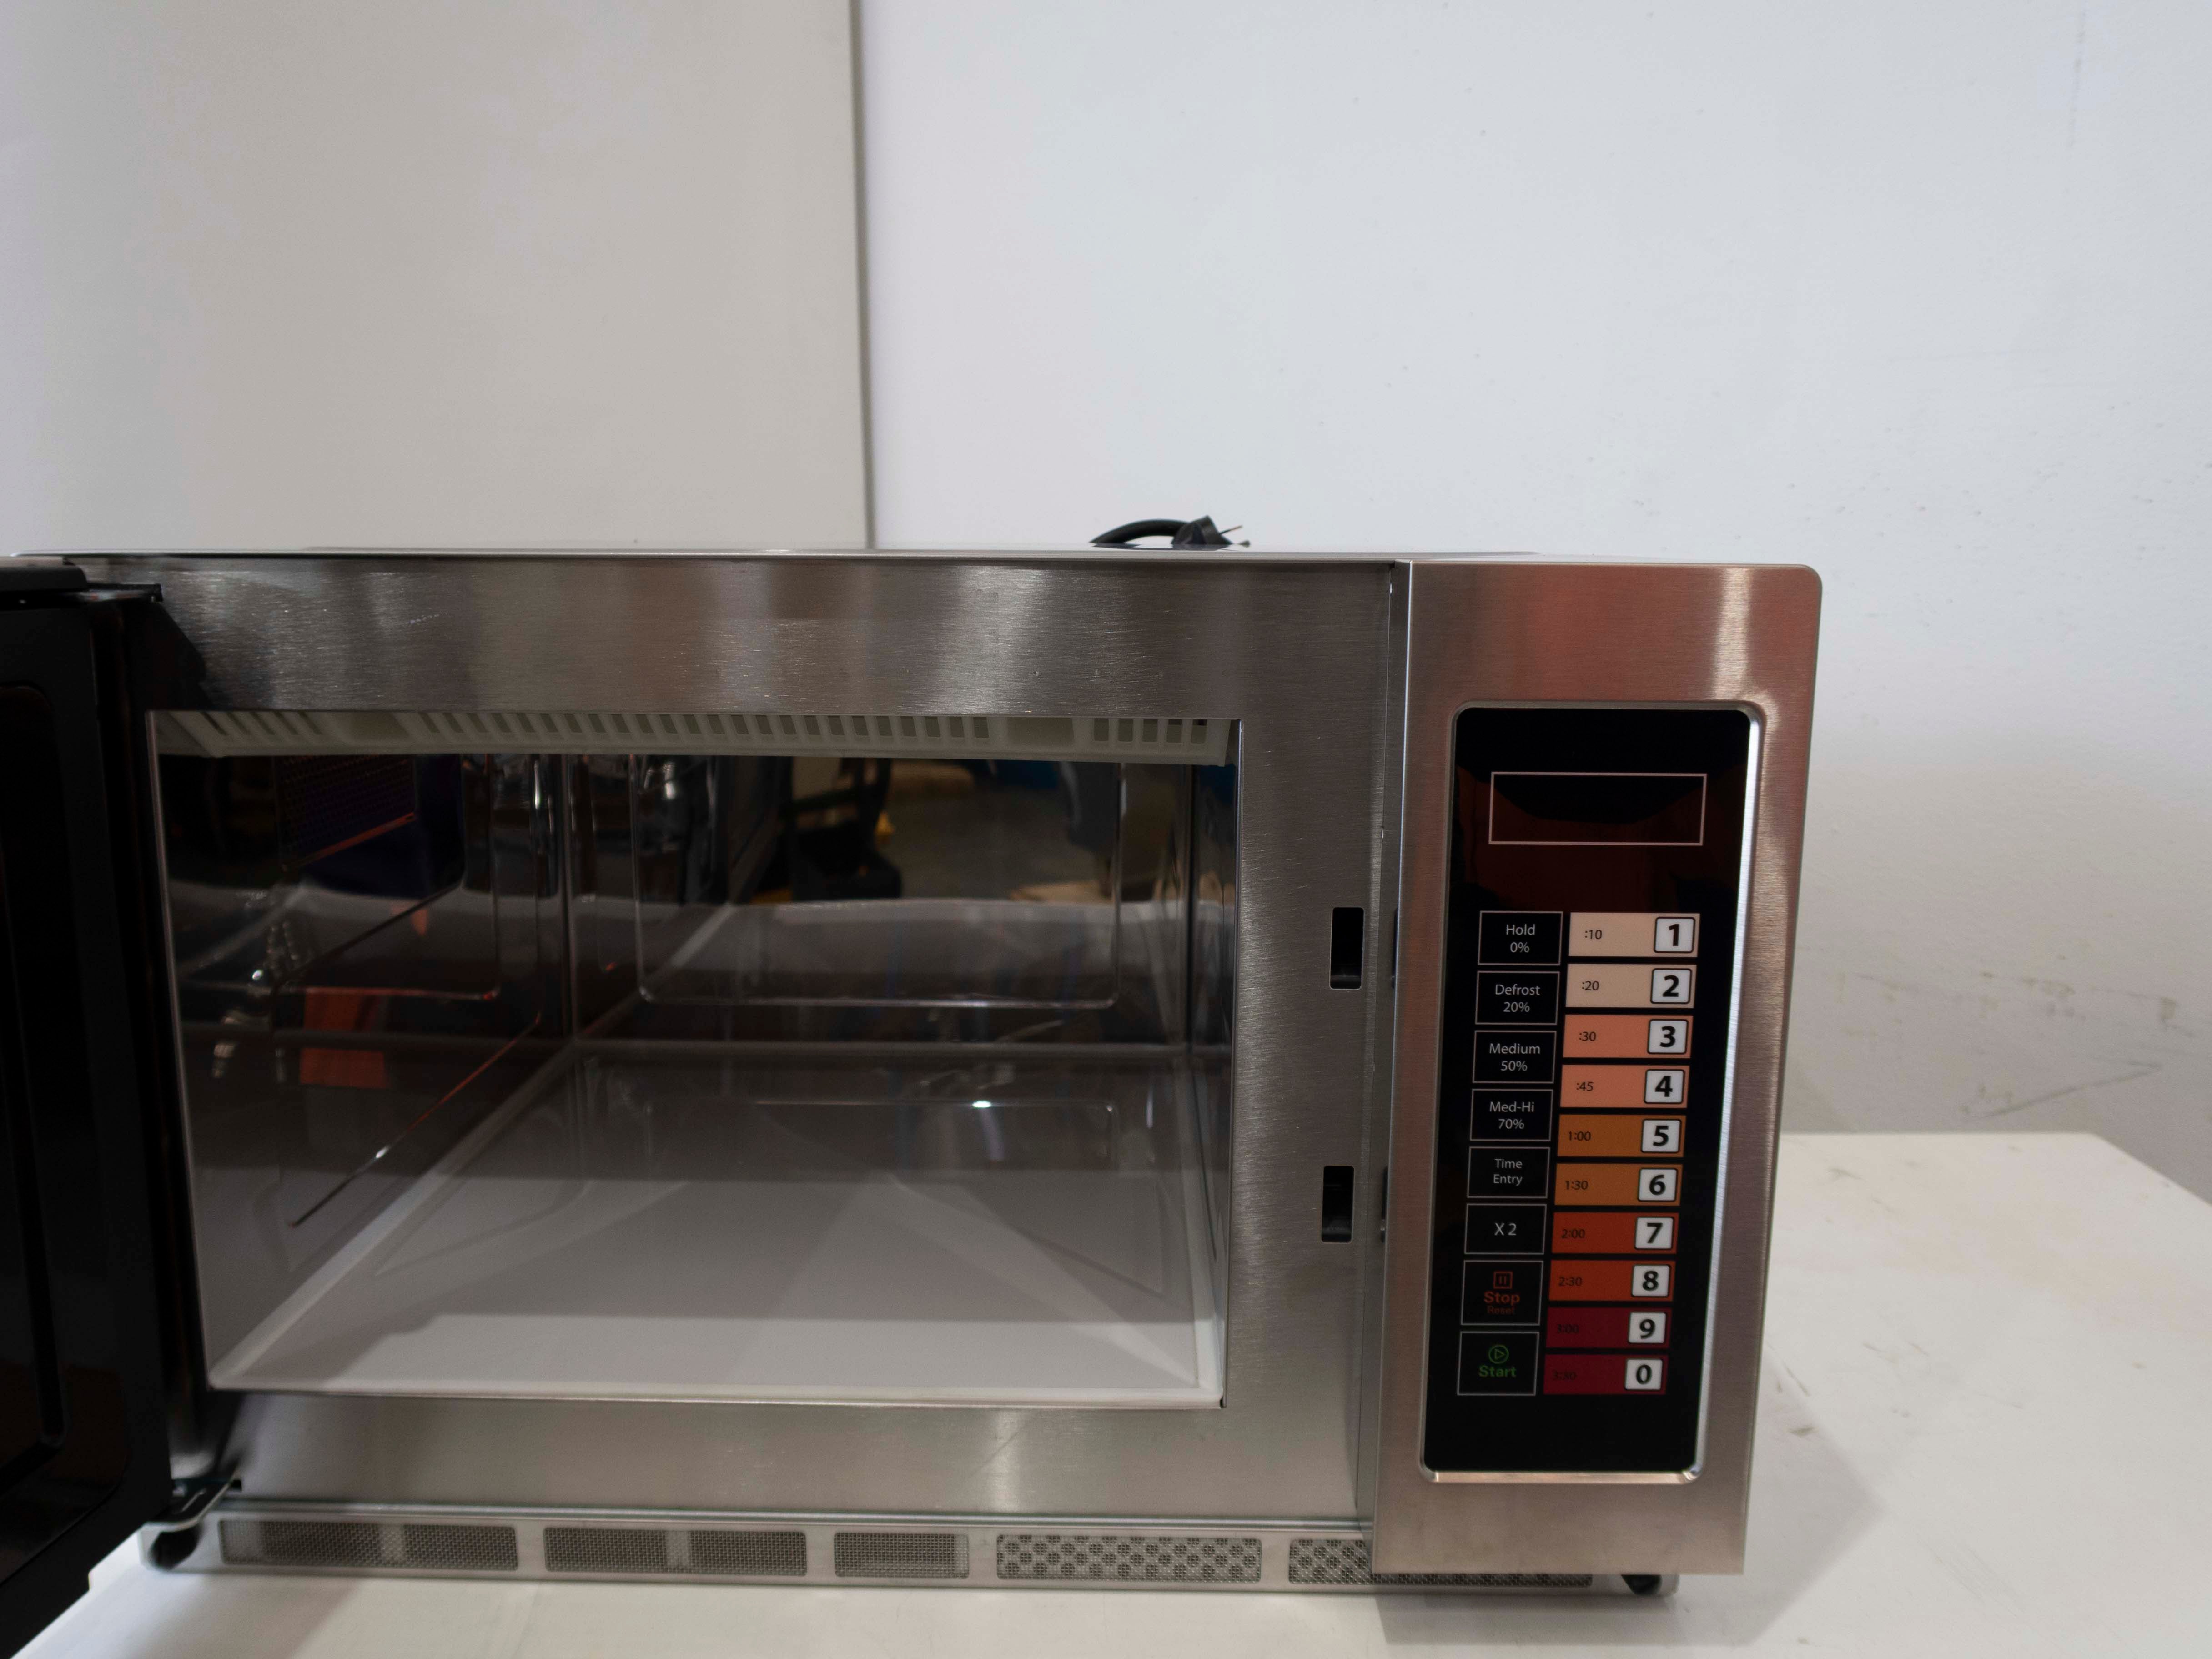 Thumbnail - Bonn CM-2100G Microwave Oven